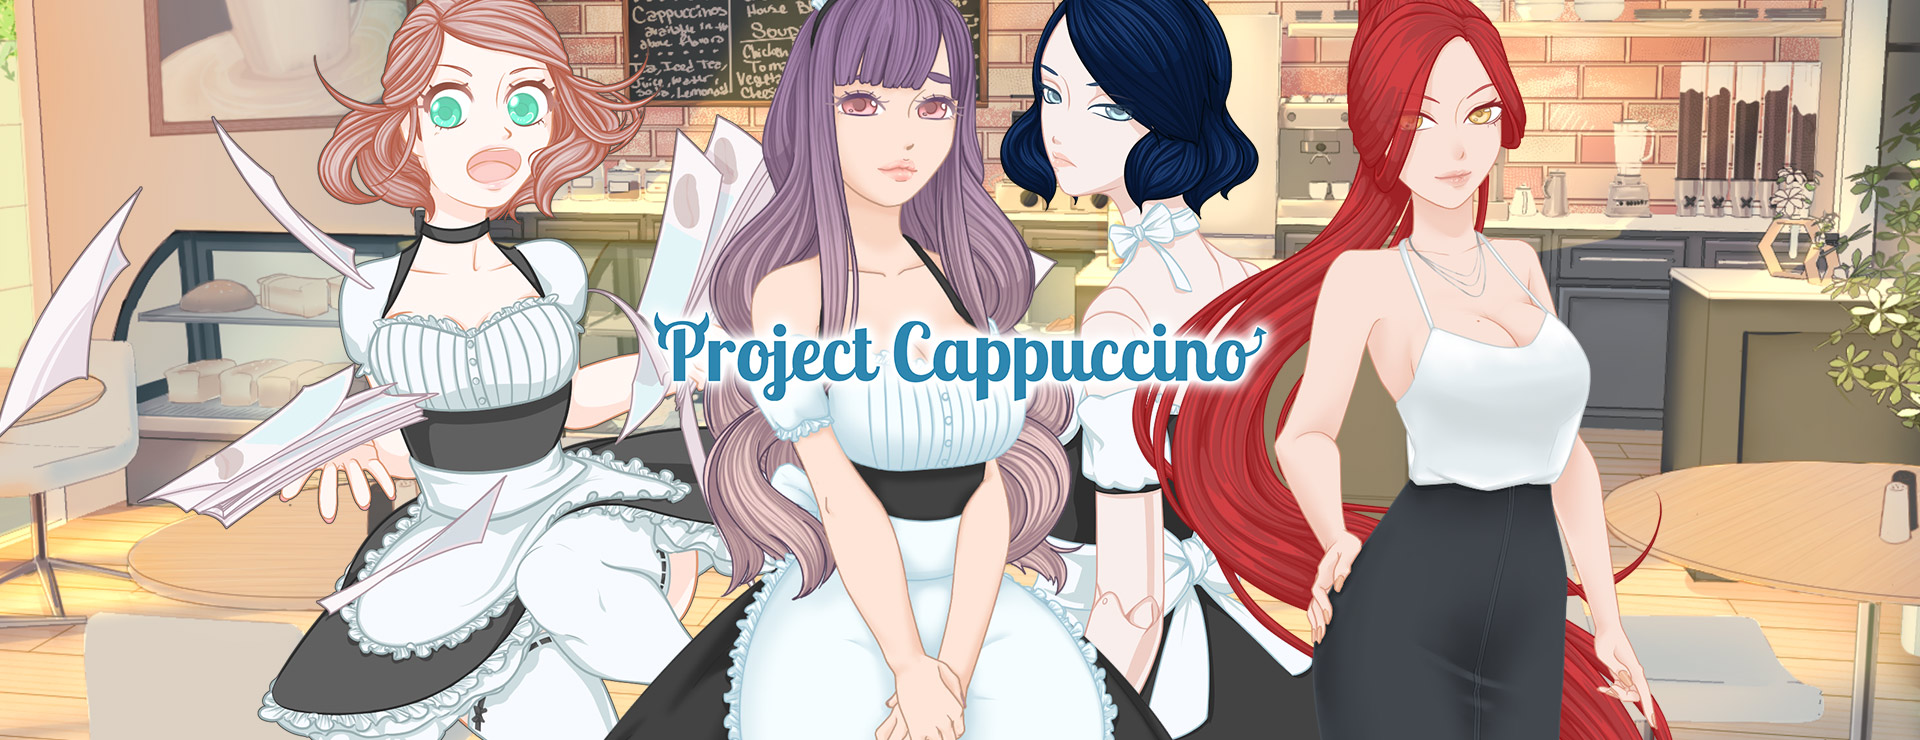 Project Cappuccino - 虚拟小说 遊戲